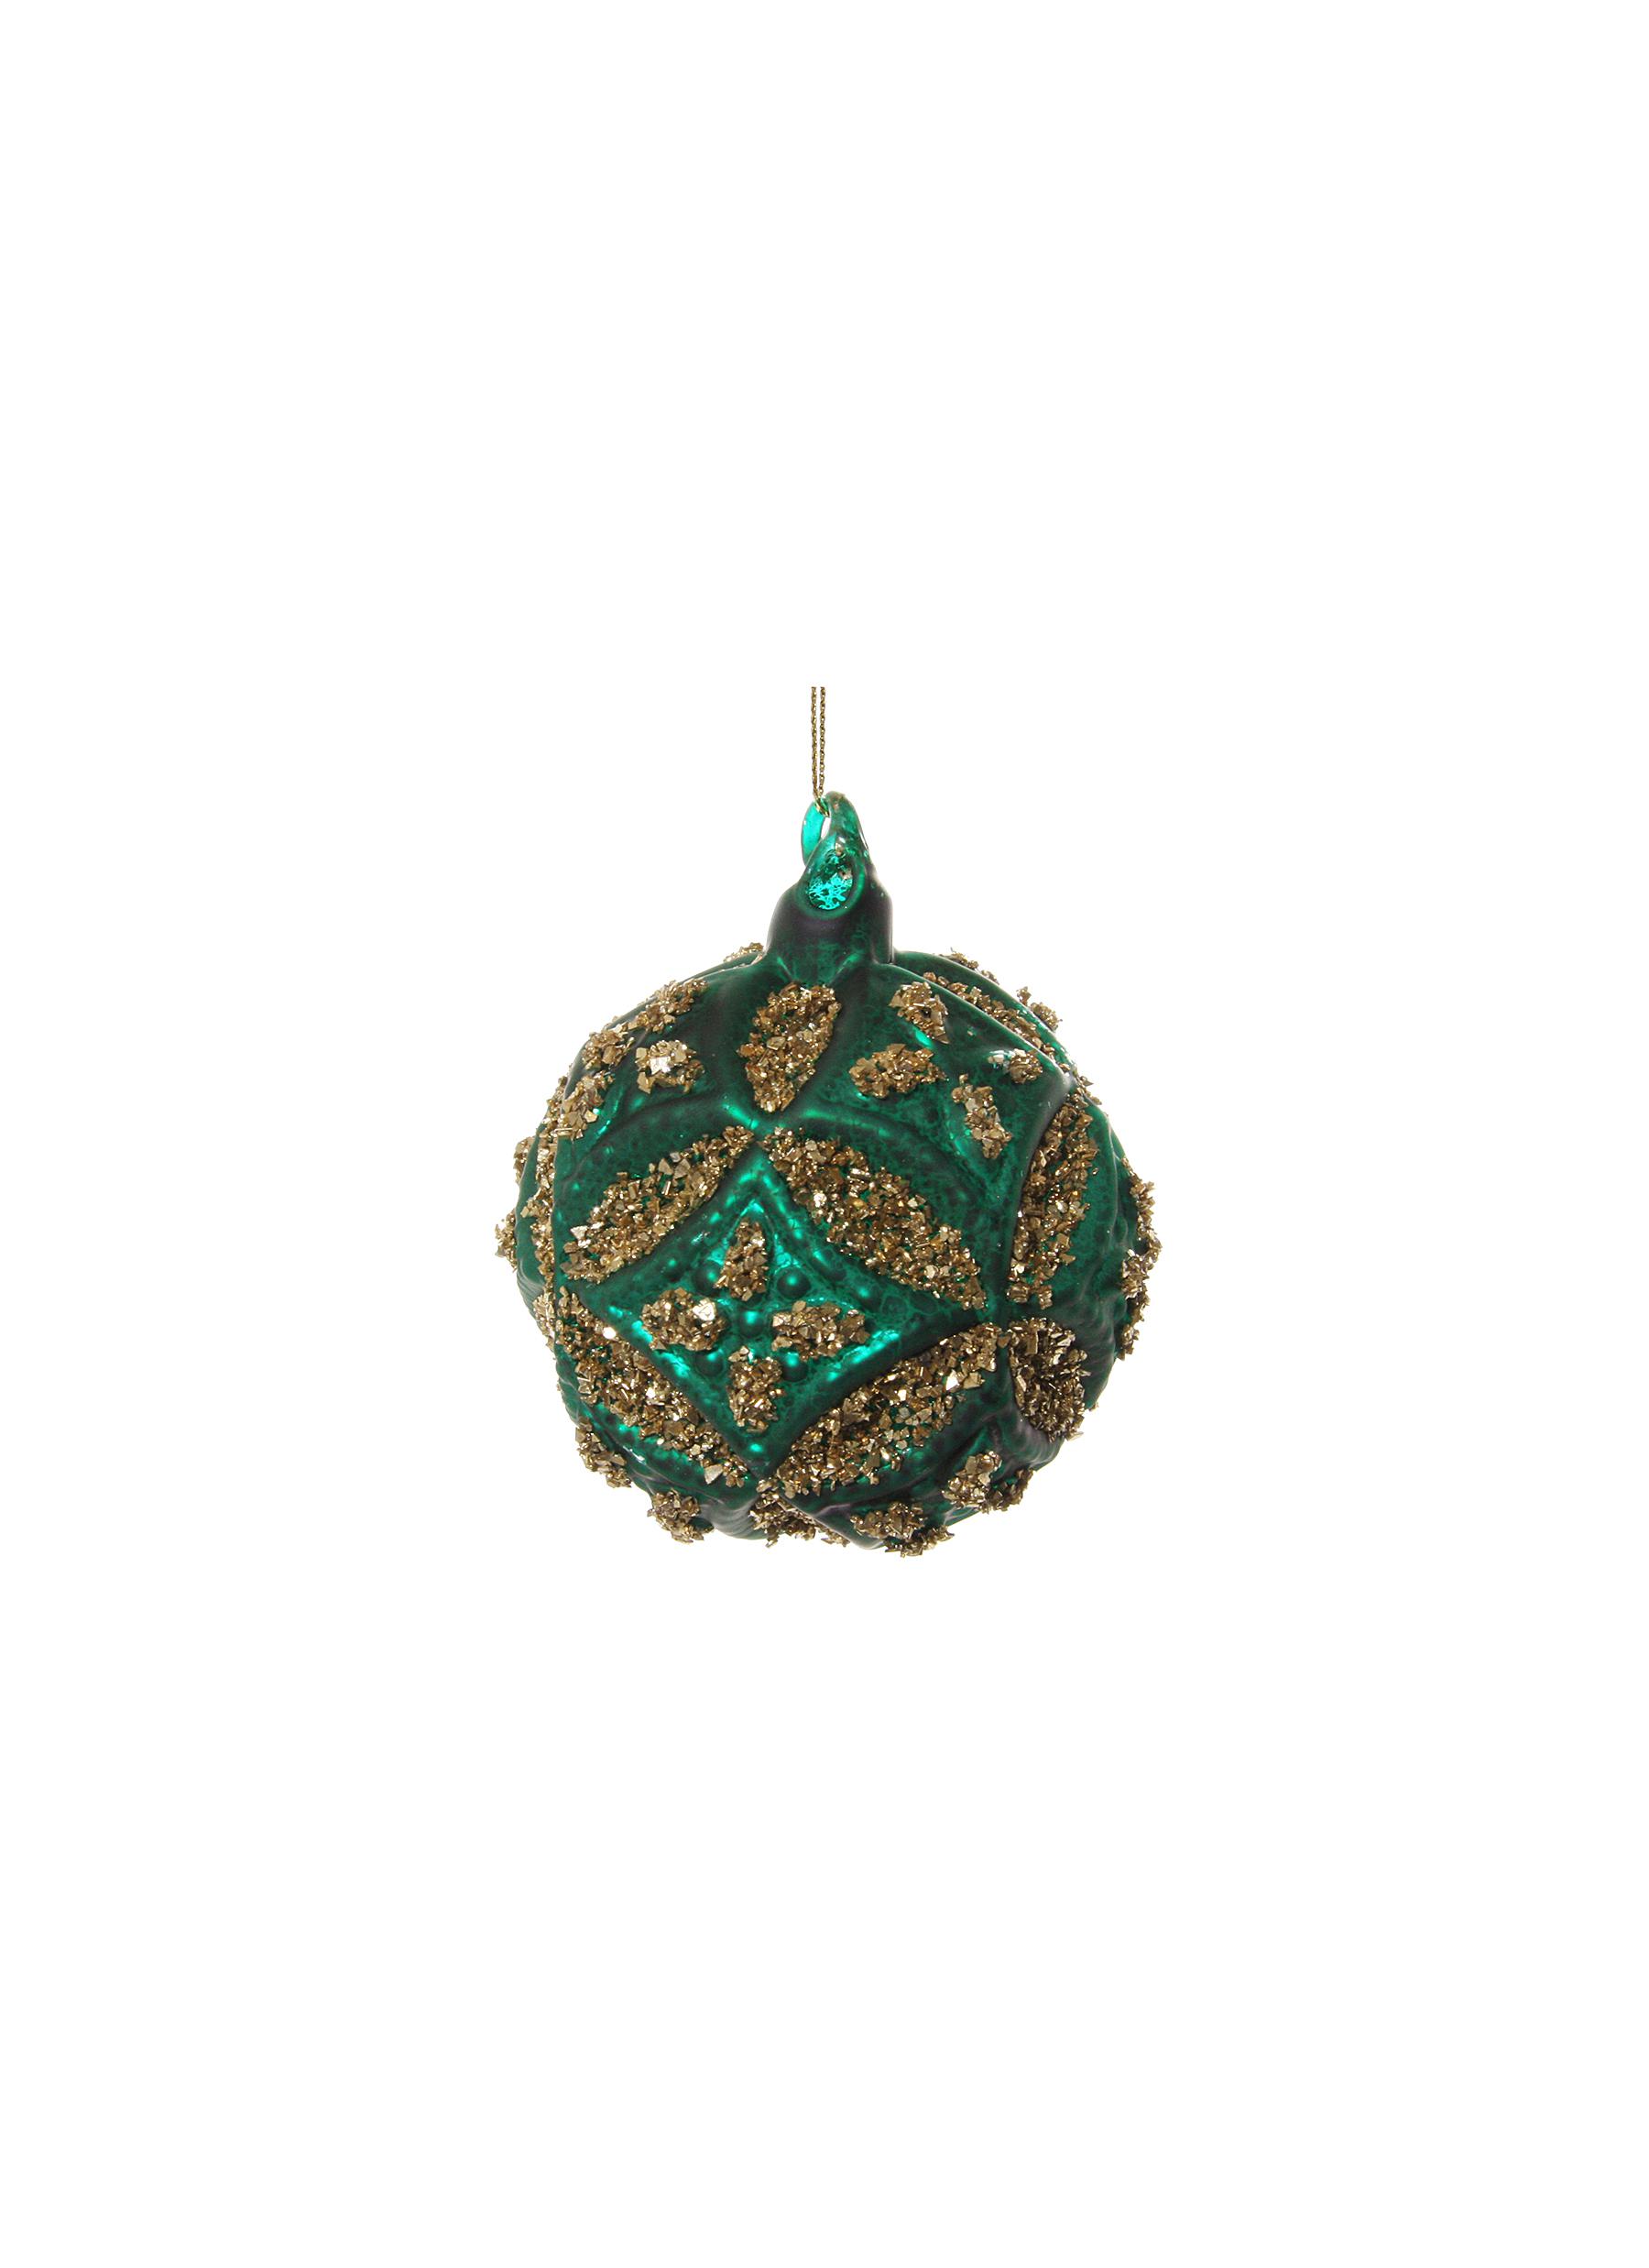 Glitter Floral Accent Antique Glass Ball Ornament - Green/Gold